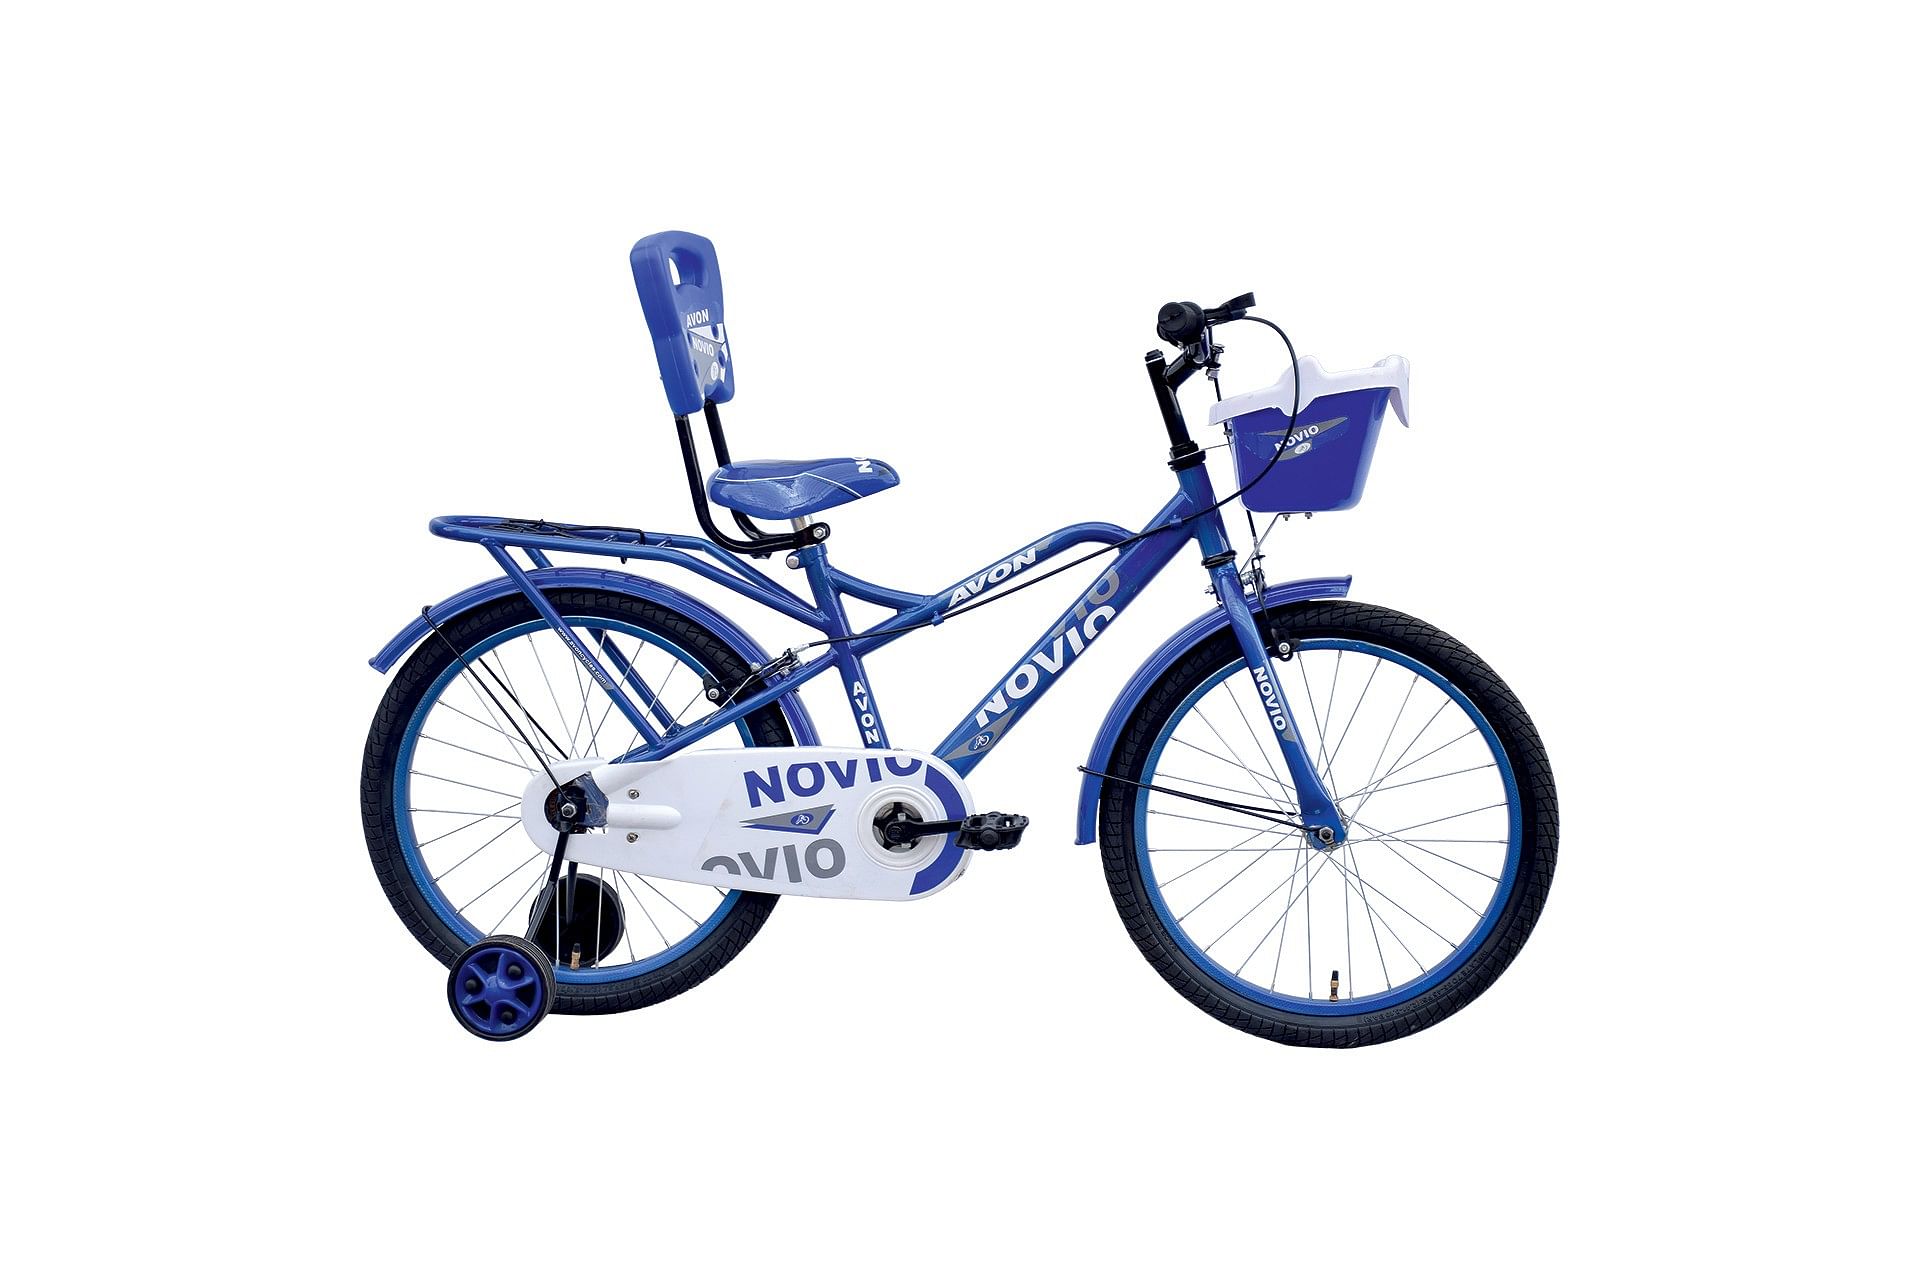 Avon Novio 16T cycle